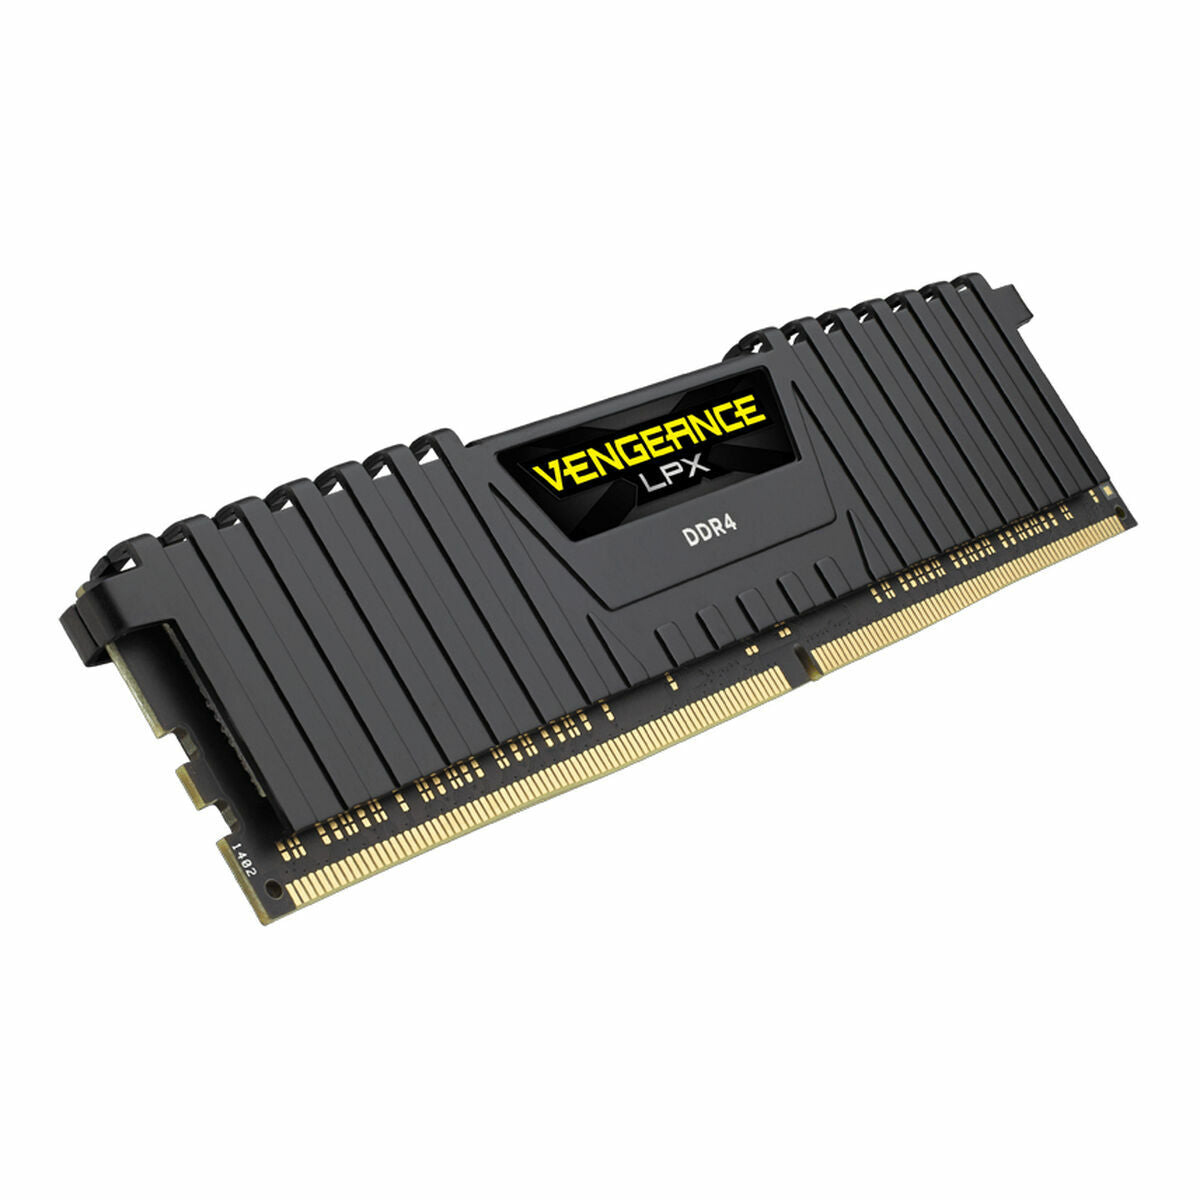 RAM Memory Corsair CMK16GX4M2B3000C15 CL15-0